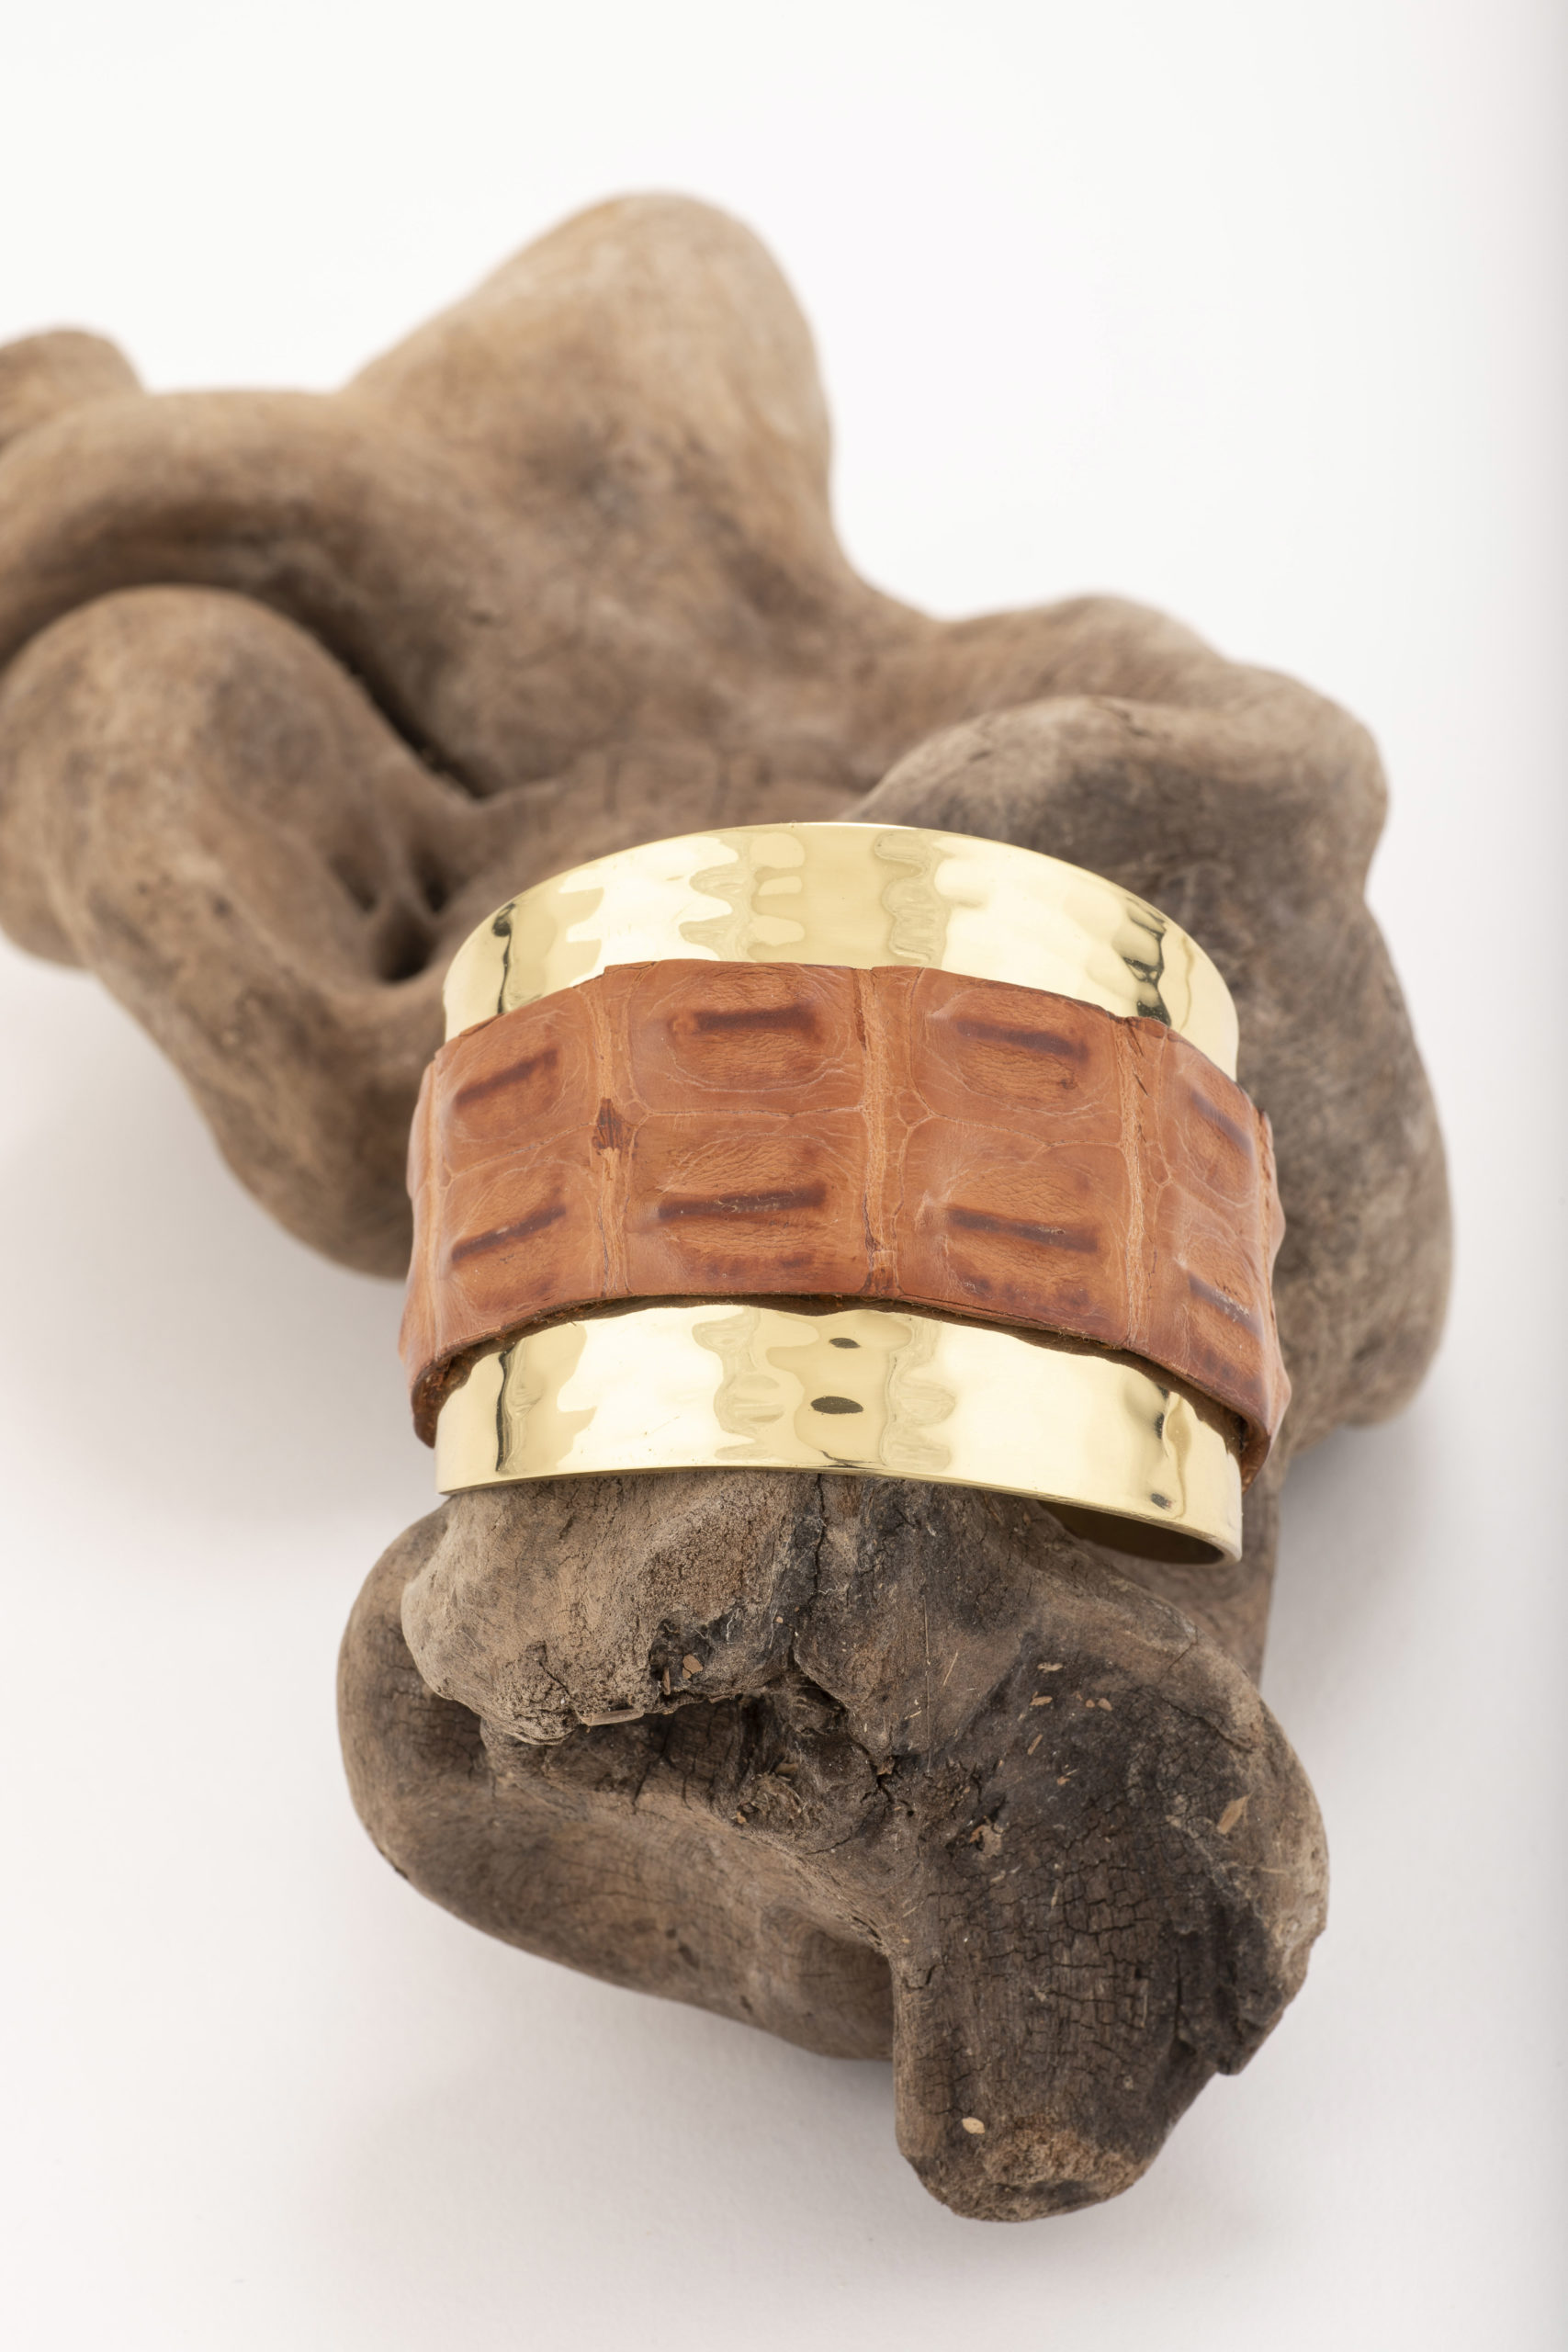 Featured image for “Fallon Brass Bracelet”